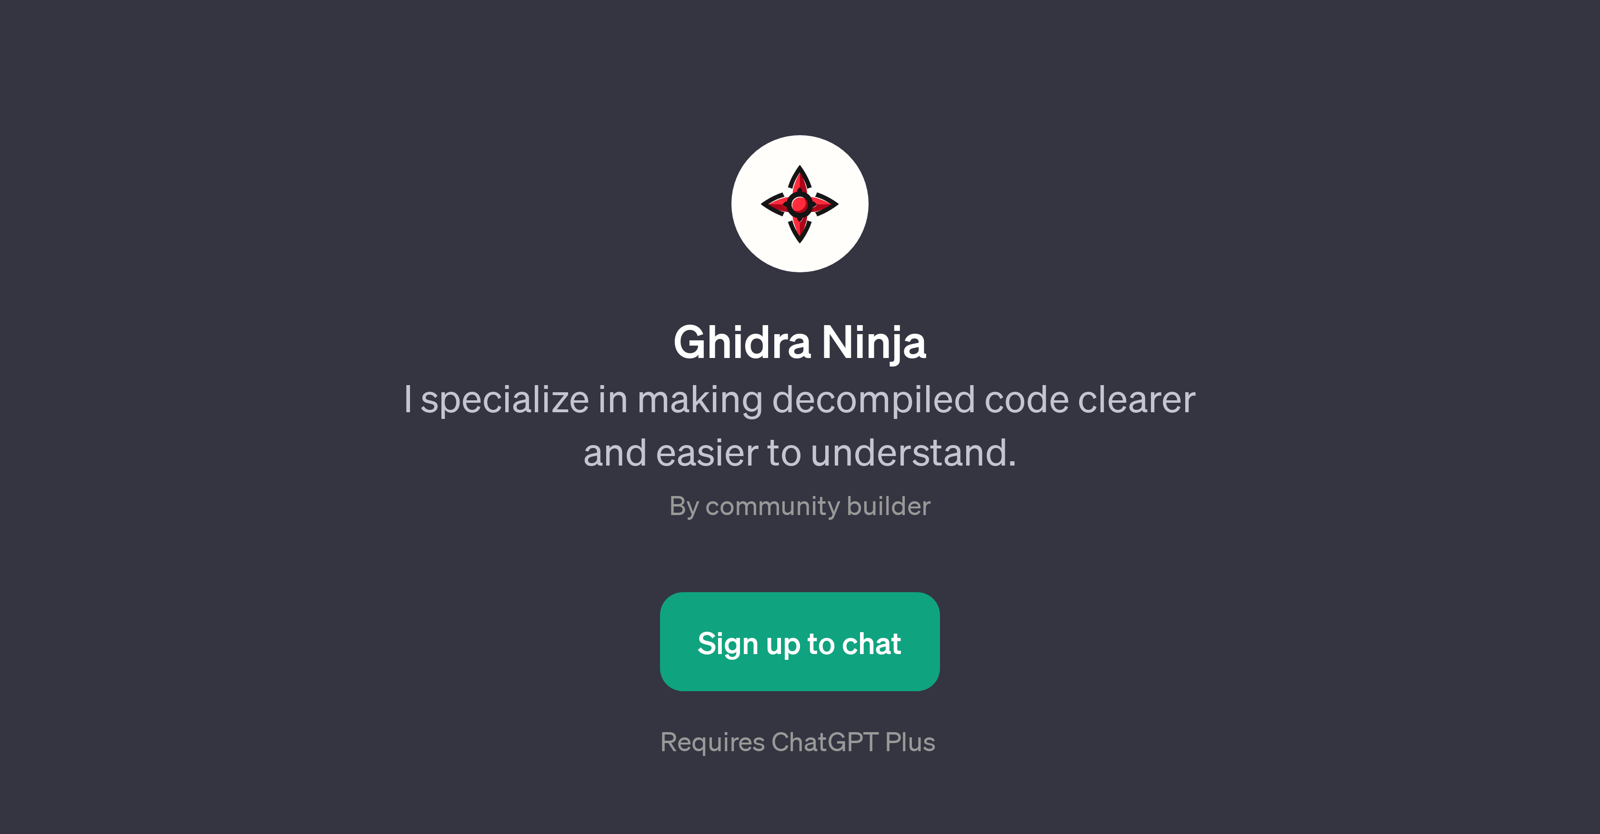 Ghidra Ninja website